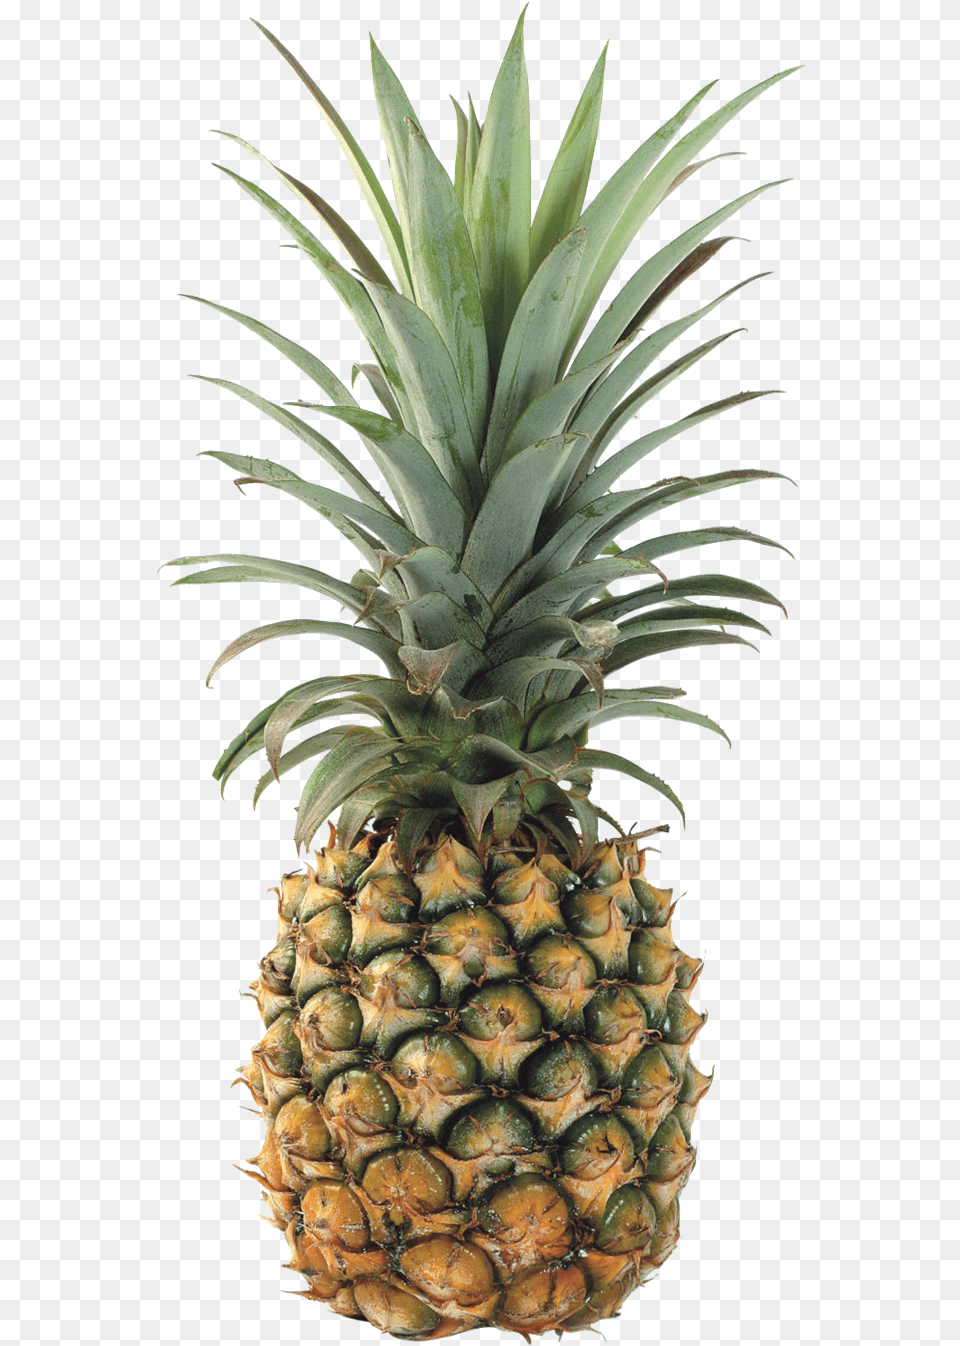 Pineapple Transparent Background Pineapple Transparent Background, Food, Fruit, Plant, Produce Png Image